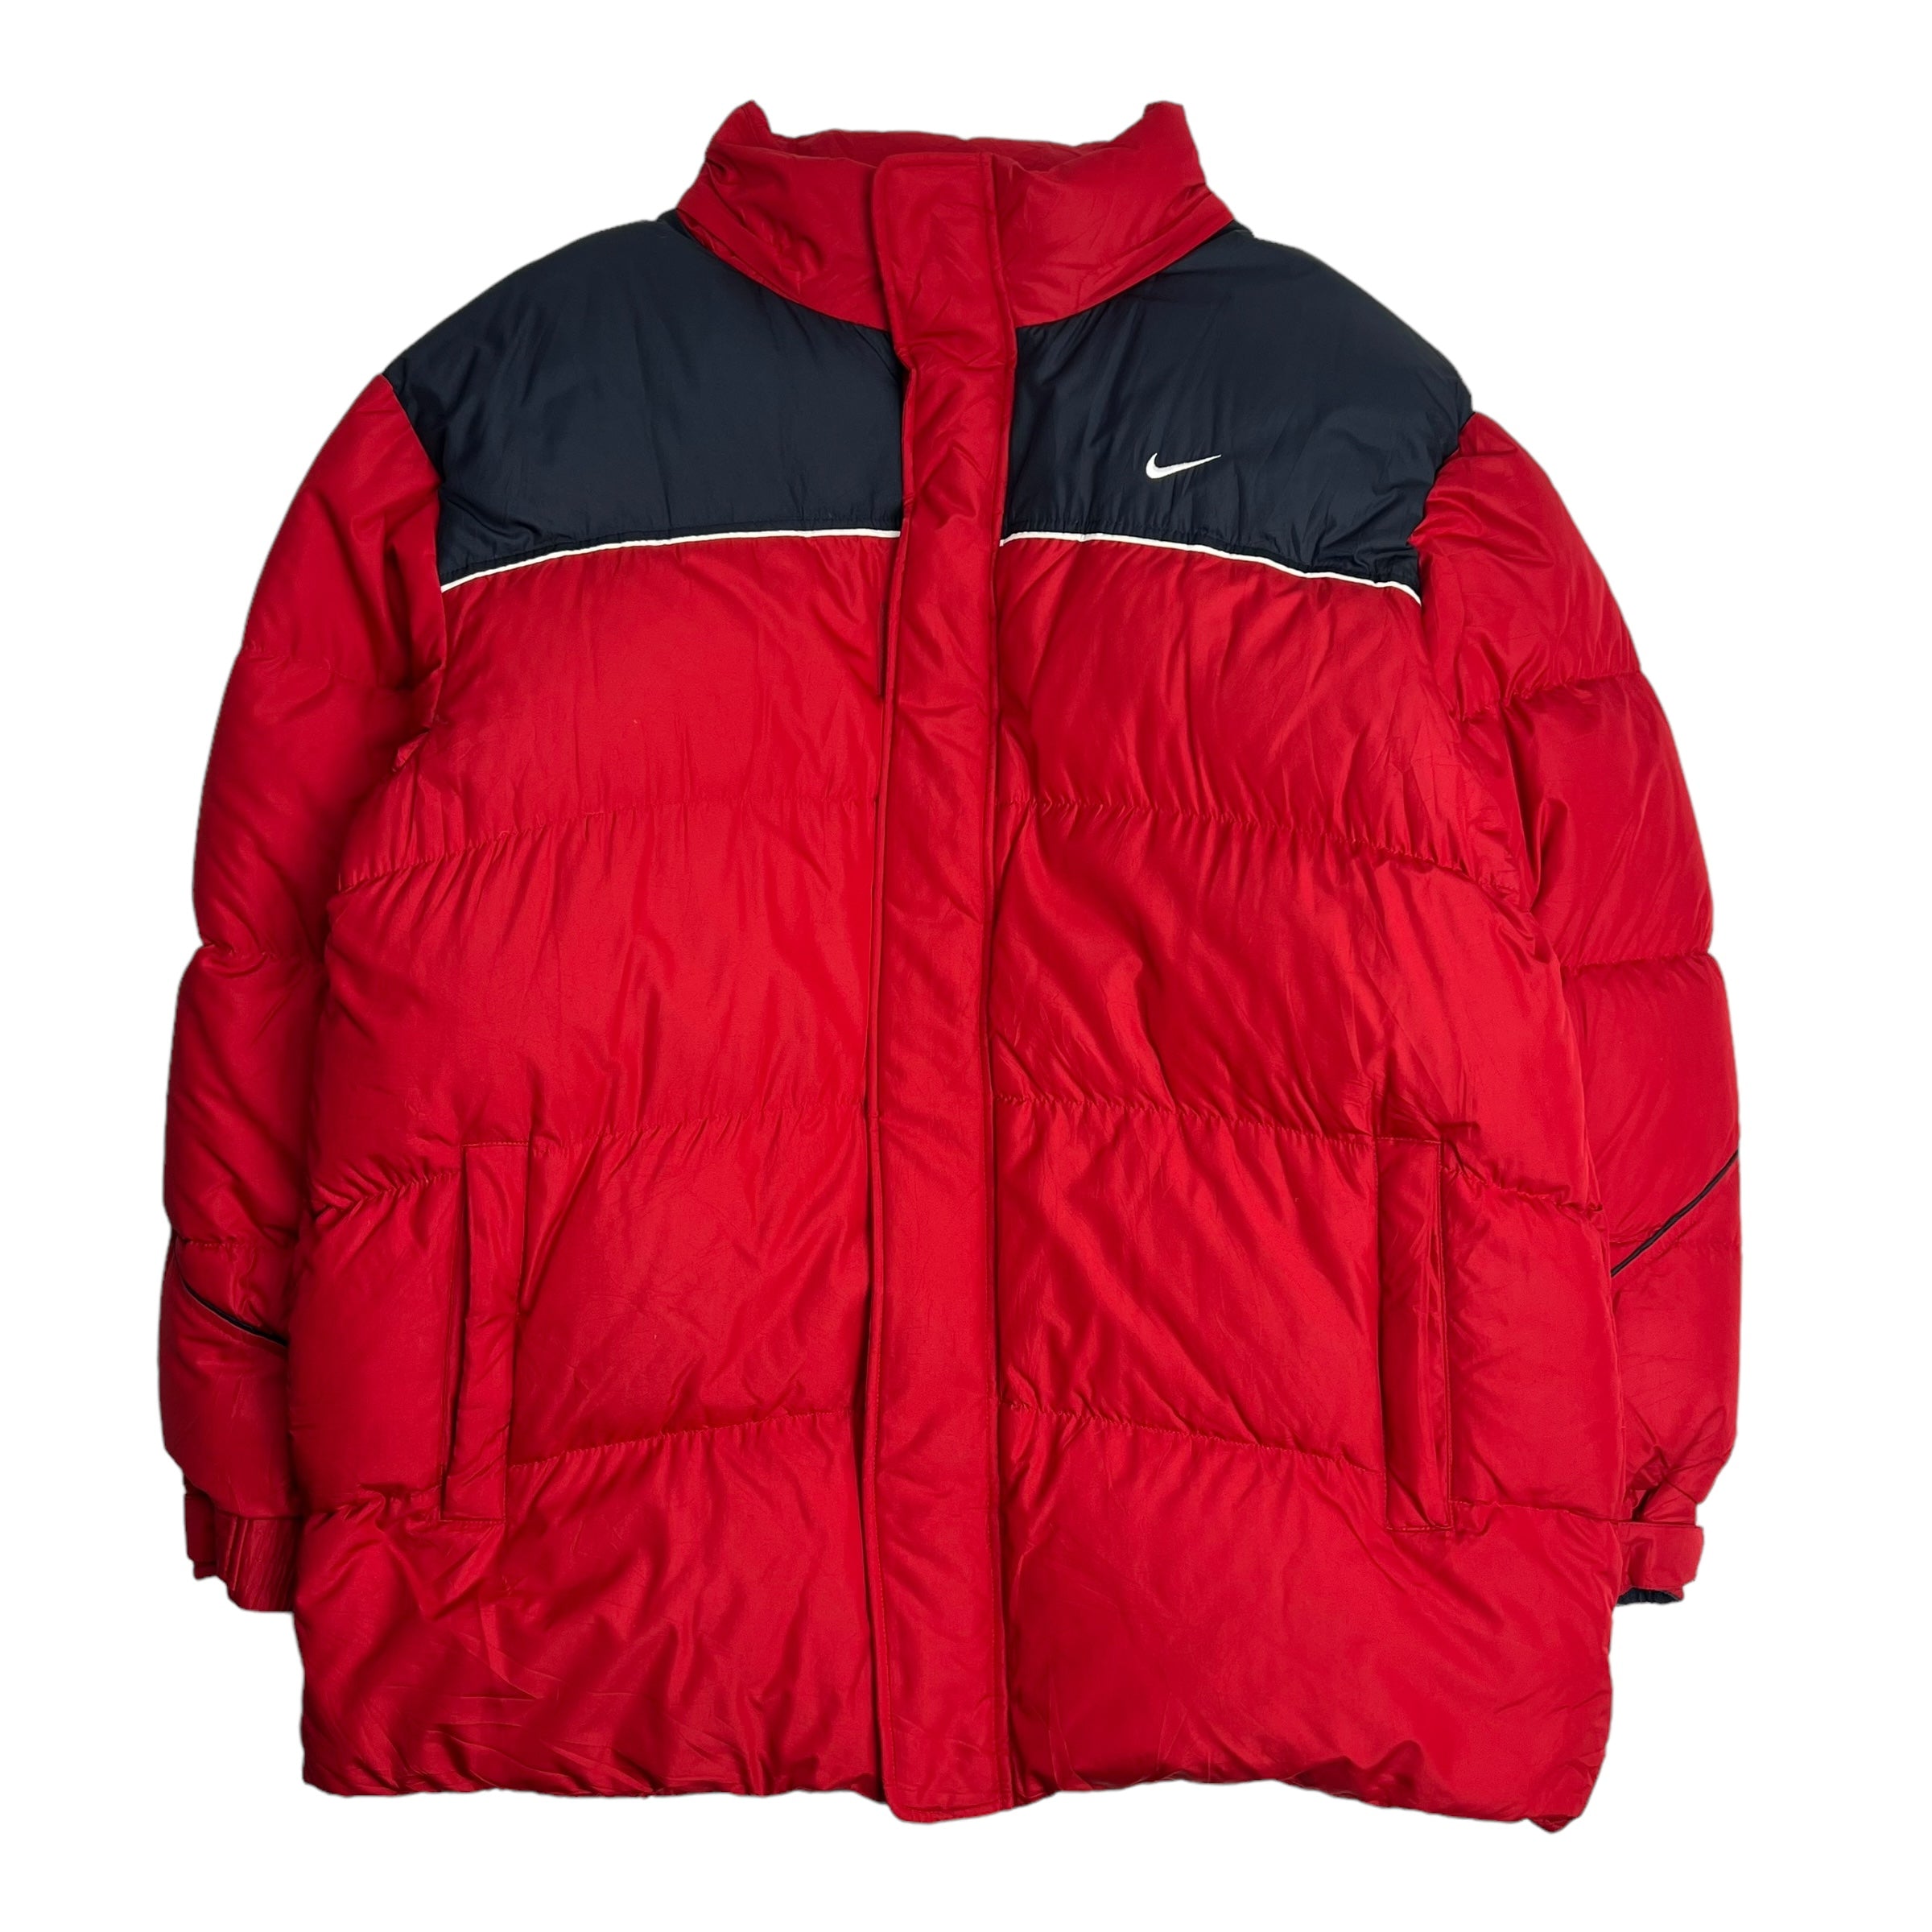 Vintage Nike Side Swoosh Classic Puffer Jacket - Red/Black Winter Coat